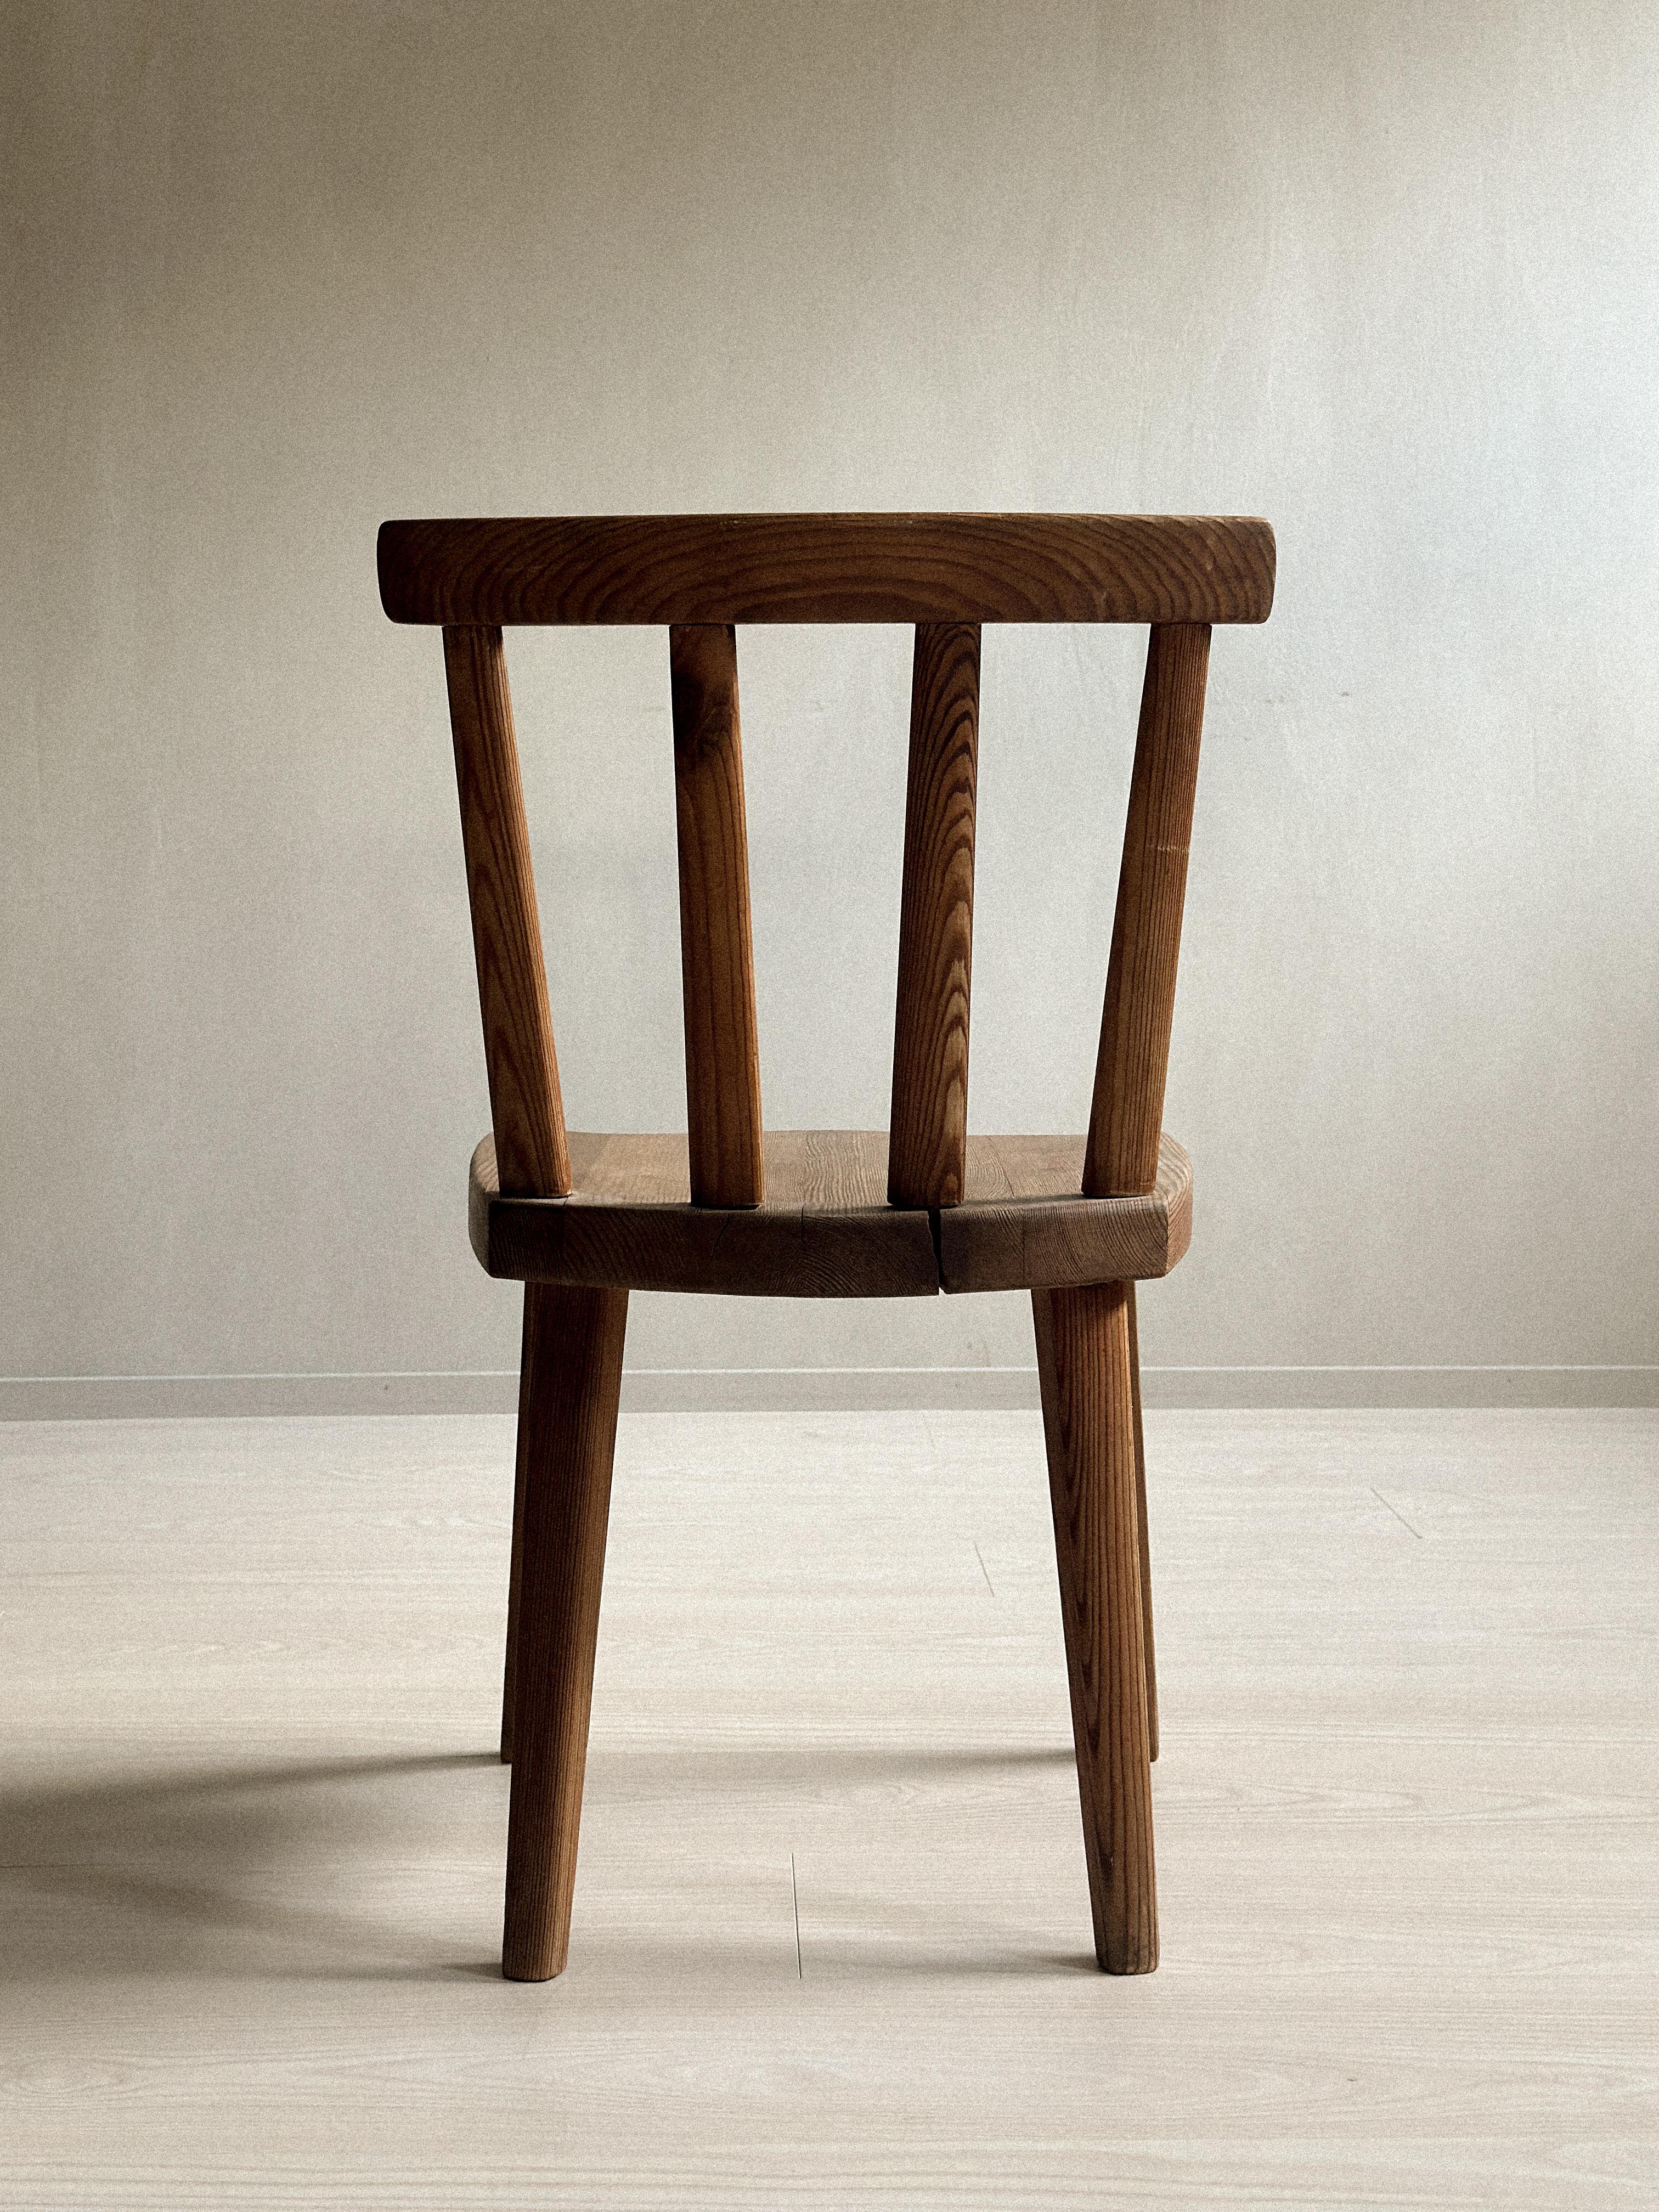 A single Utö Dining Chair by Axel Einar Hjorth for Nordiska Kompaniet, 1930s For Sale 6